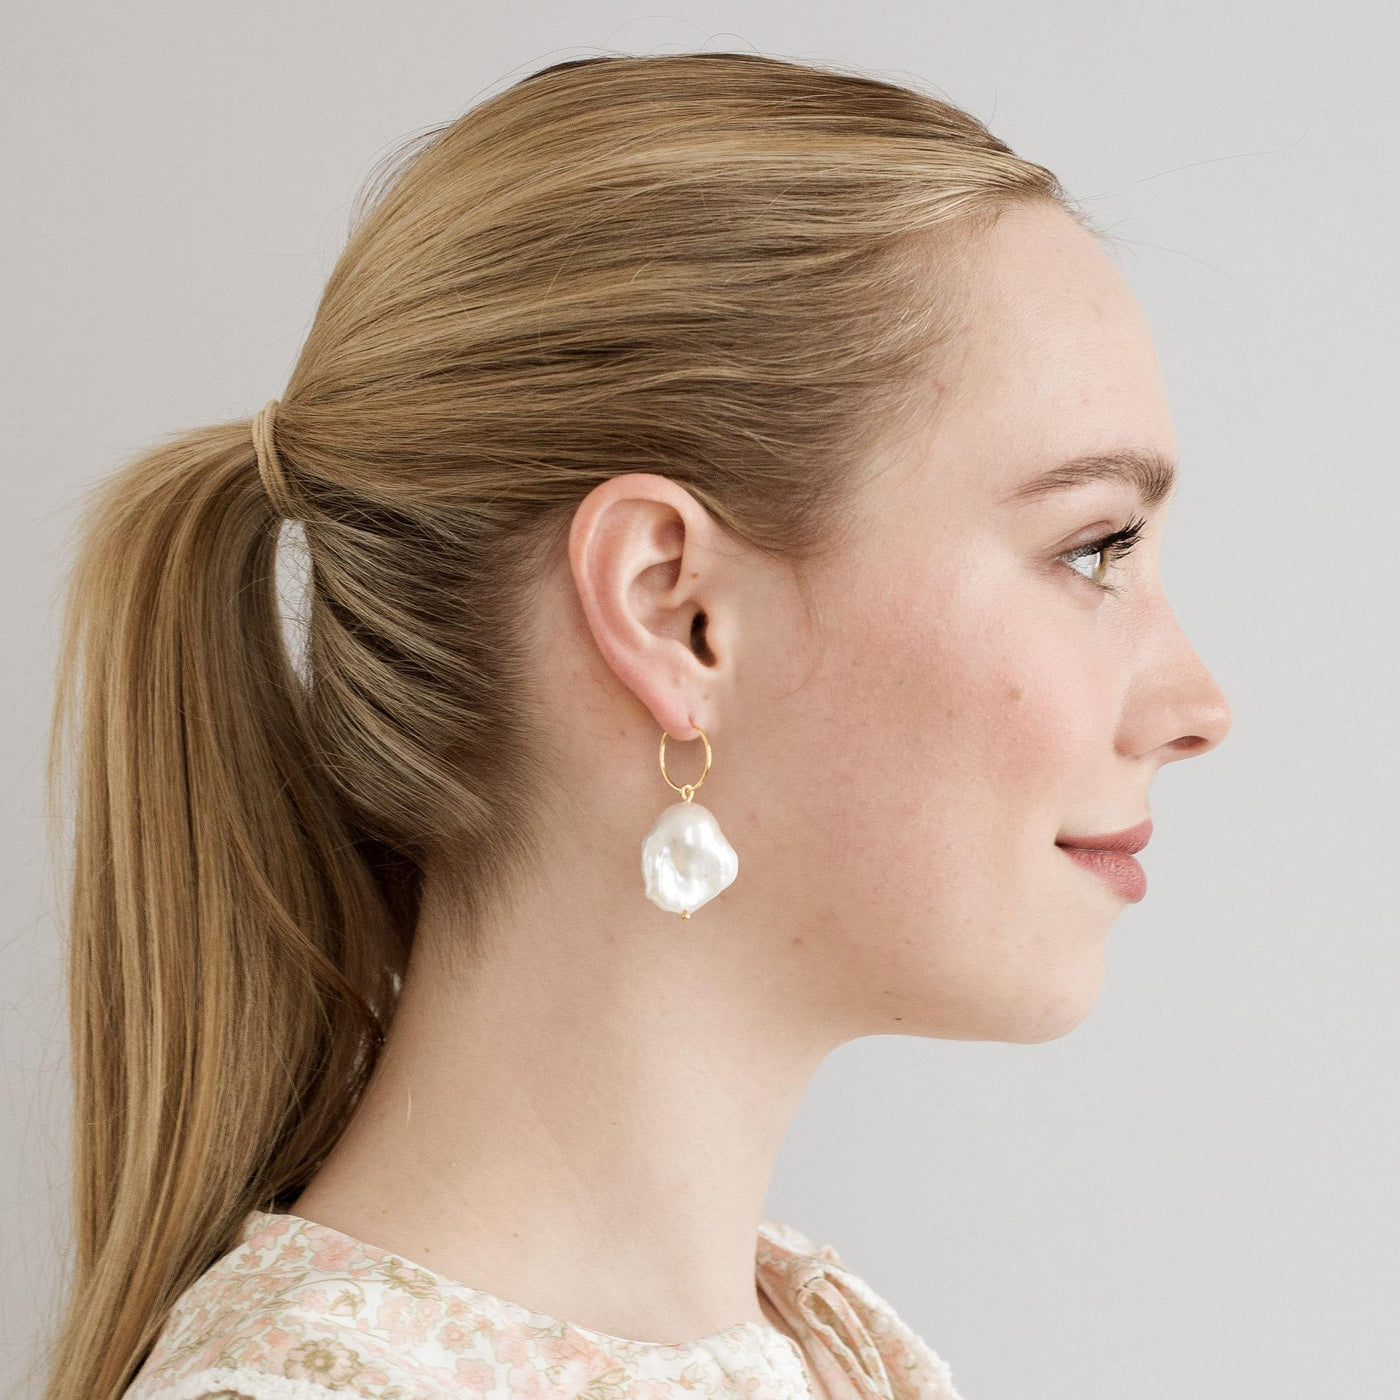 Bridal jewelry CAPRAIA 585 GOLD (14k) // Hoop earrings with large baroque pearls